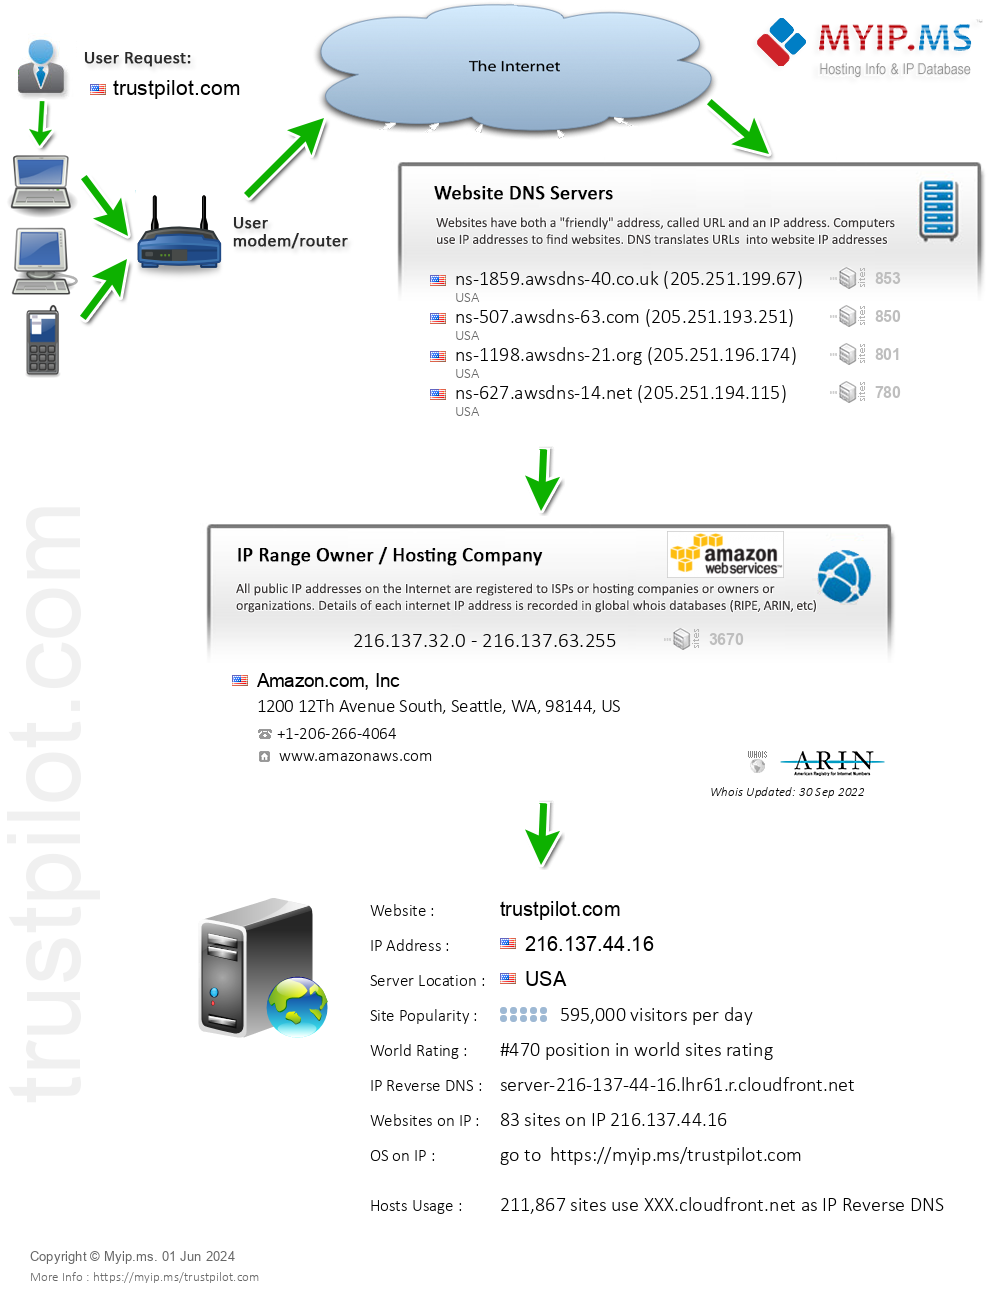 Trustpilot.com - Website Hosting Visual IP Diagram